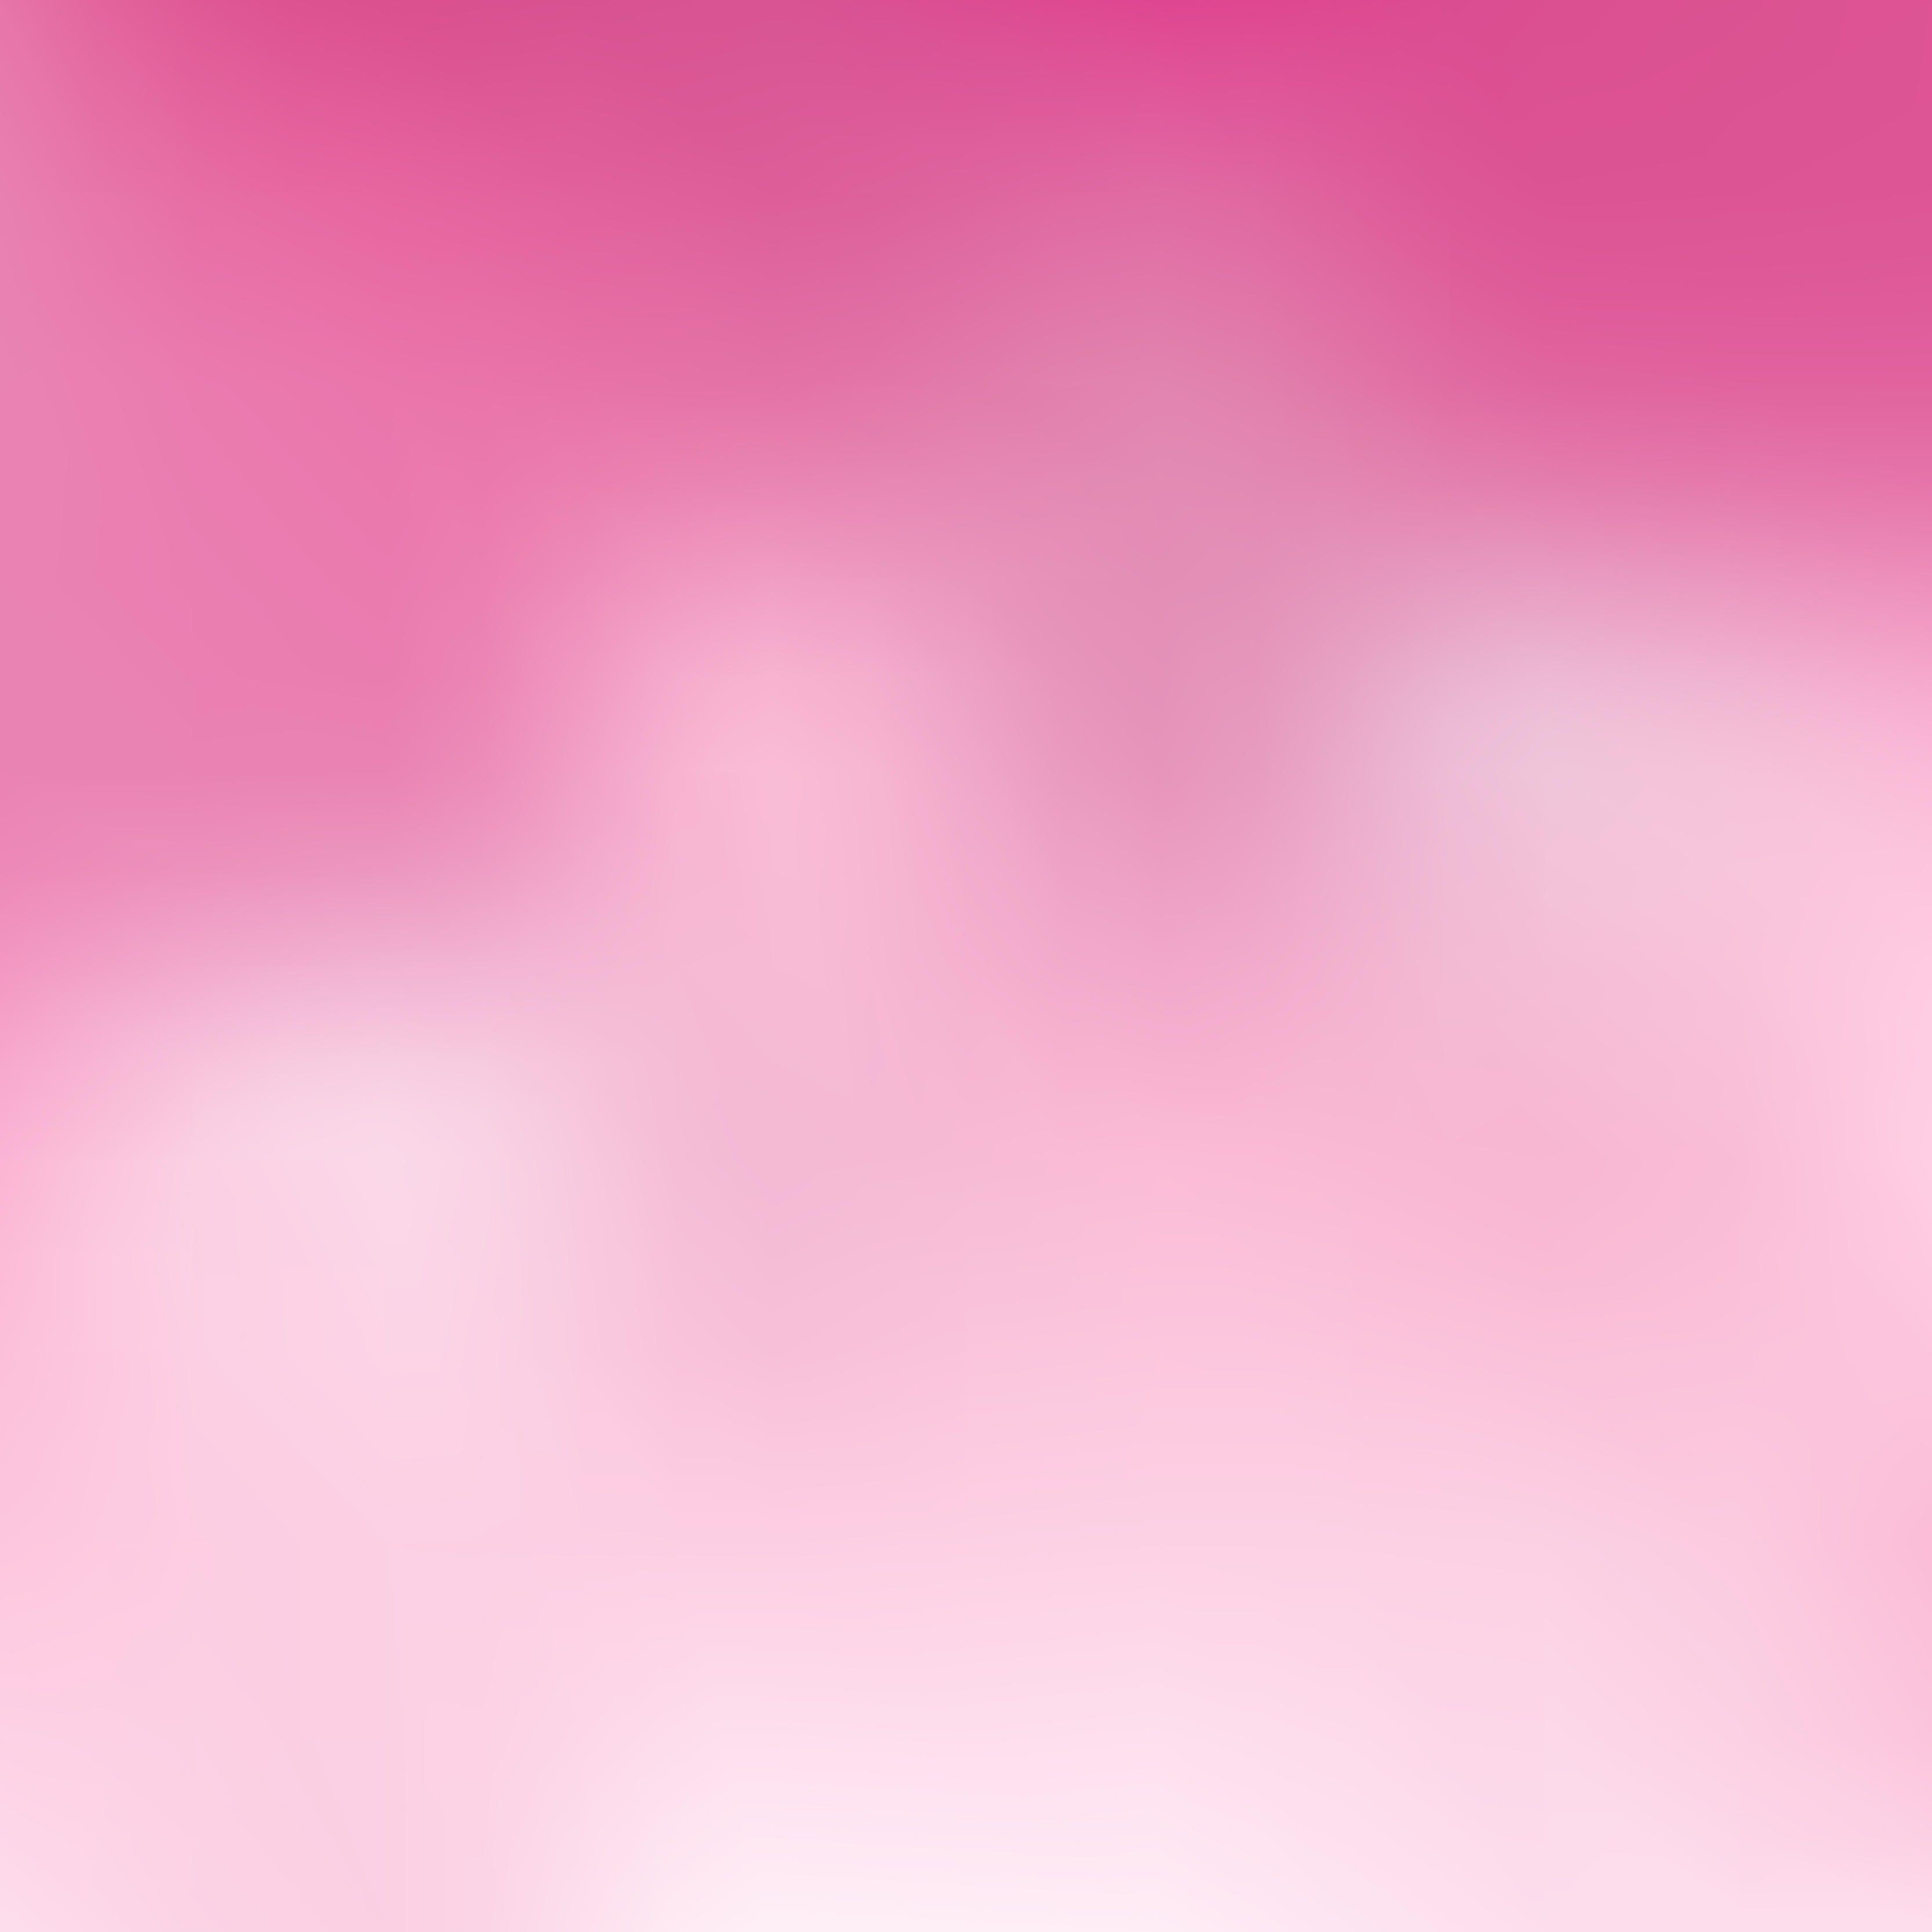 Plain Pink Background Vectors. Download Free Vector Art